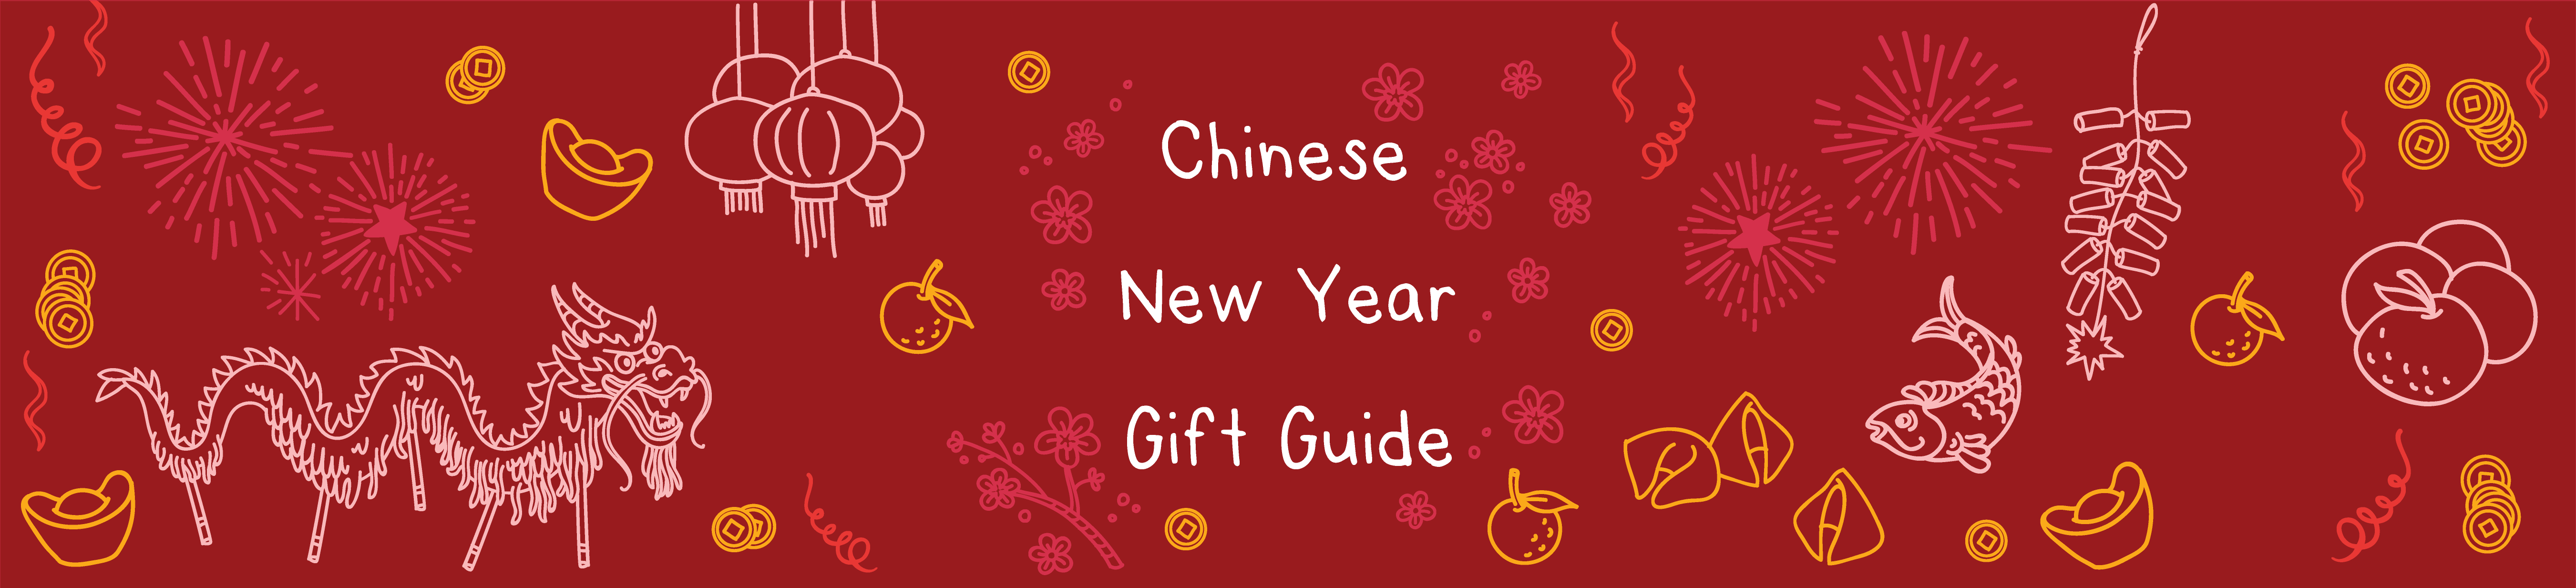 HChinese New Year Gift Guide 2016